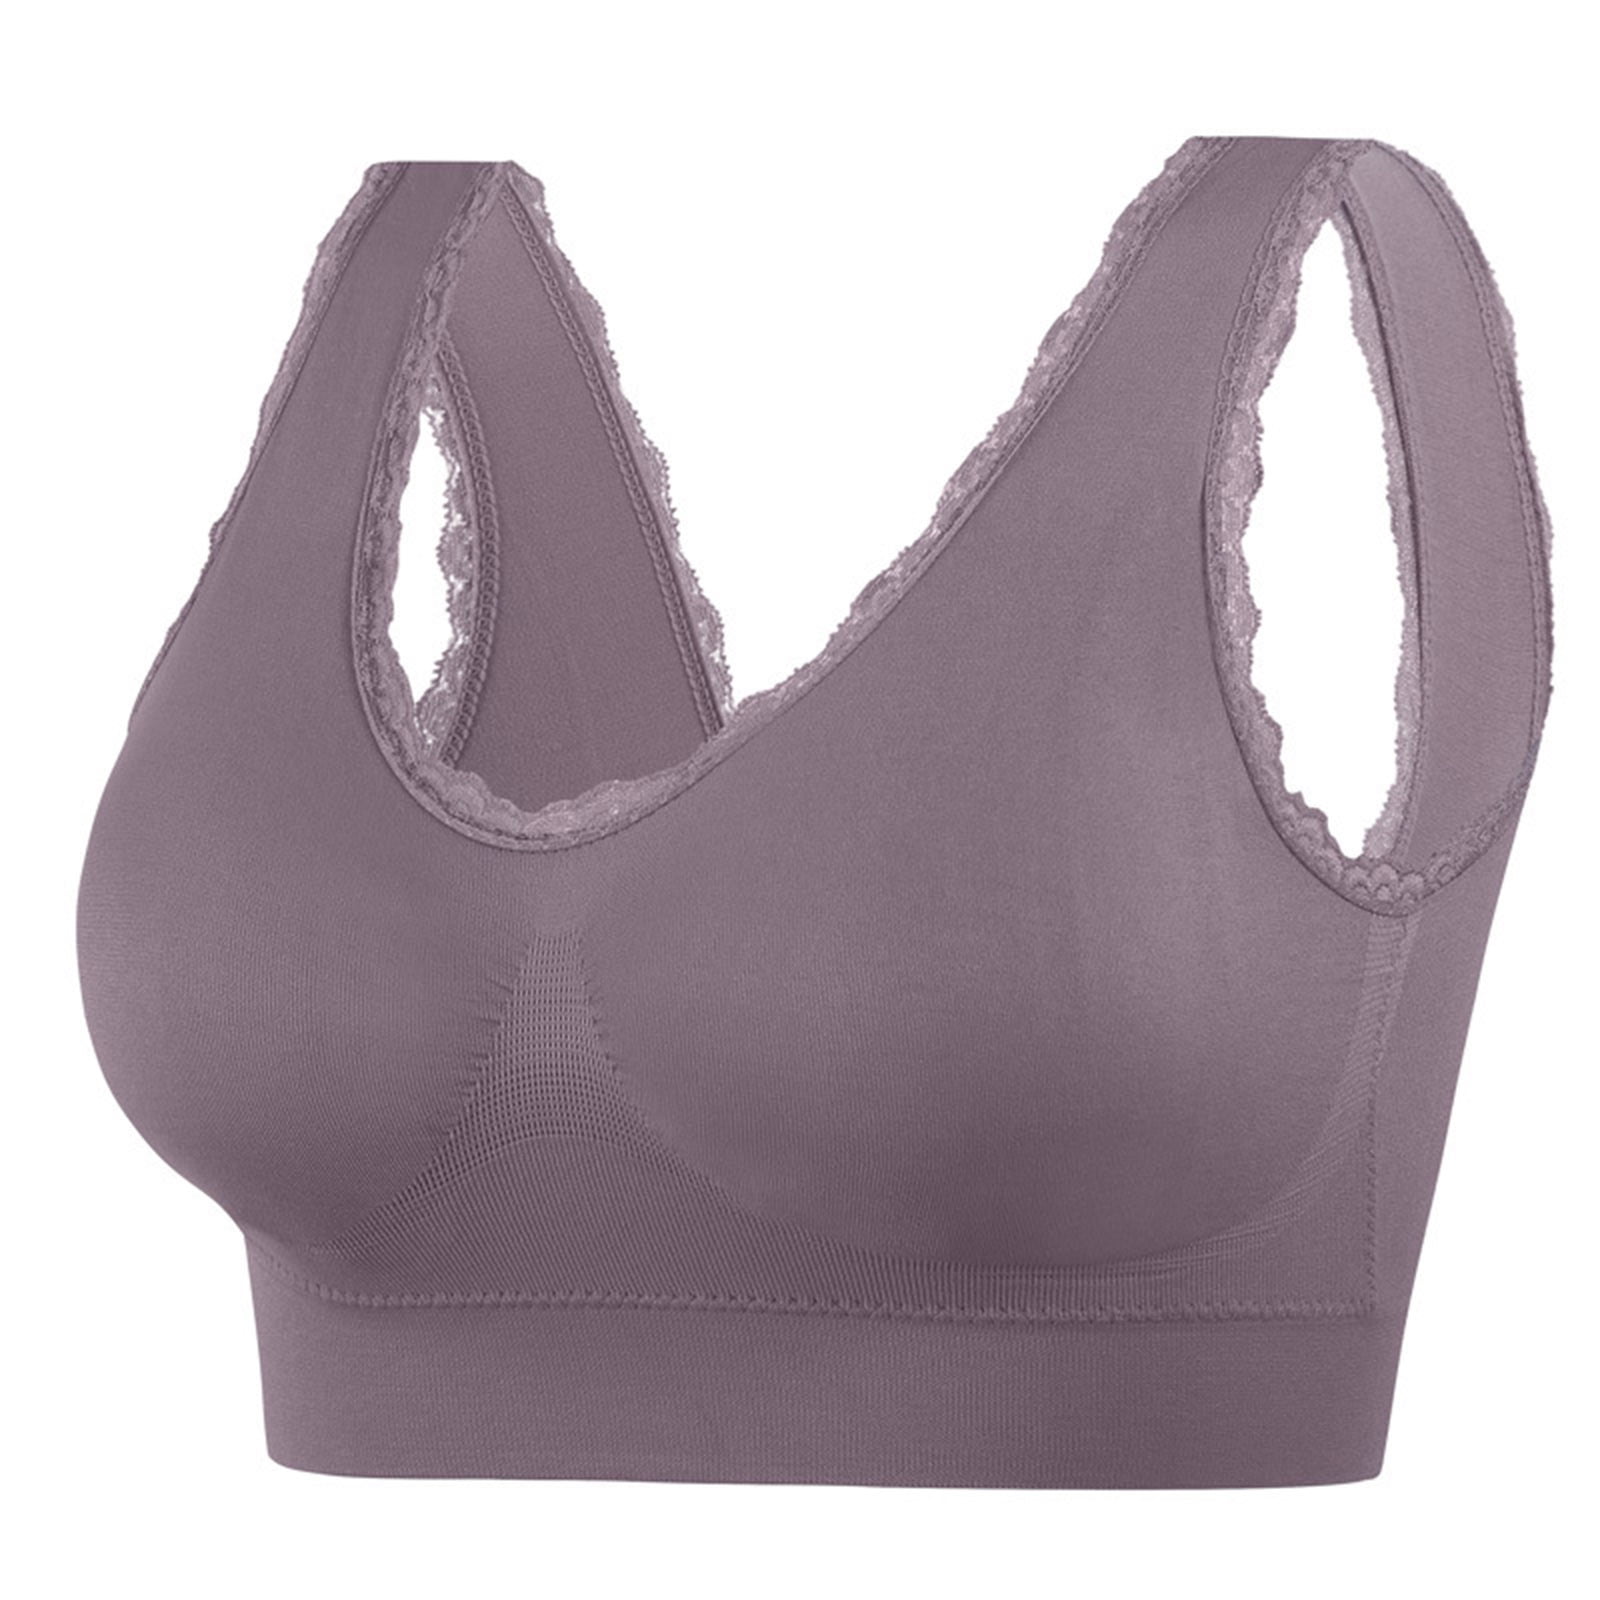 Primo Comfort - Home  Bra deals, Comfortable bras, Most comfortable bra